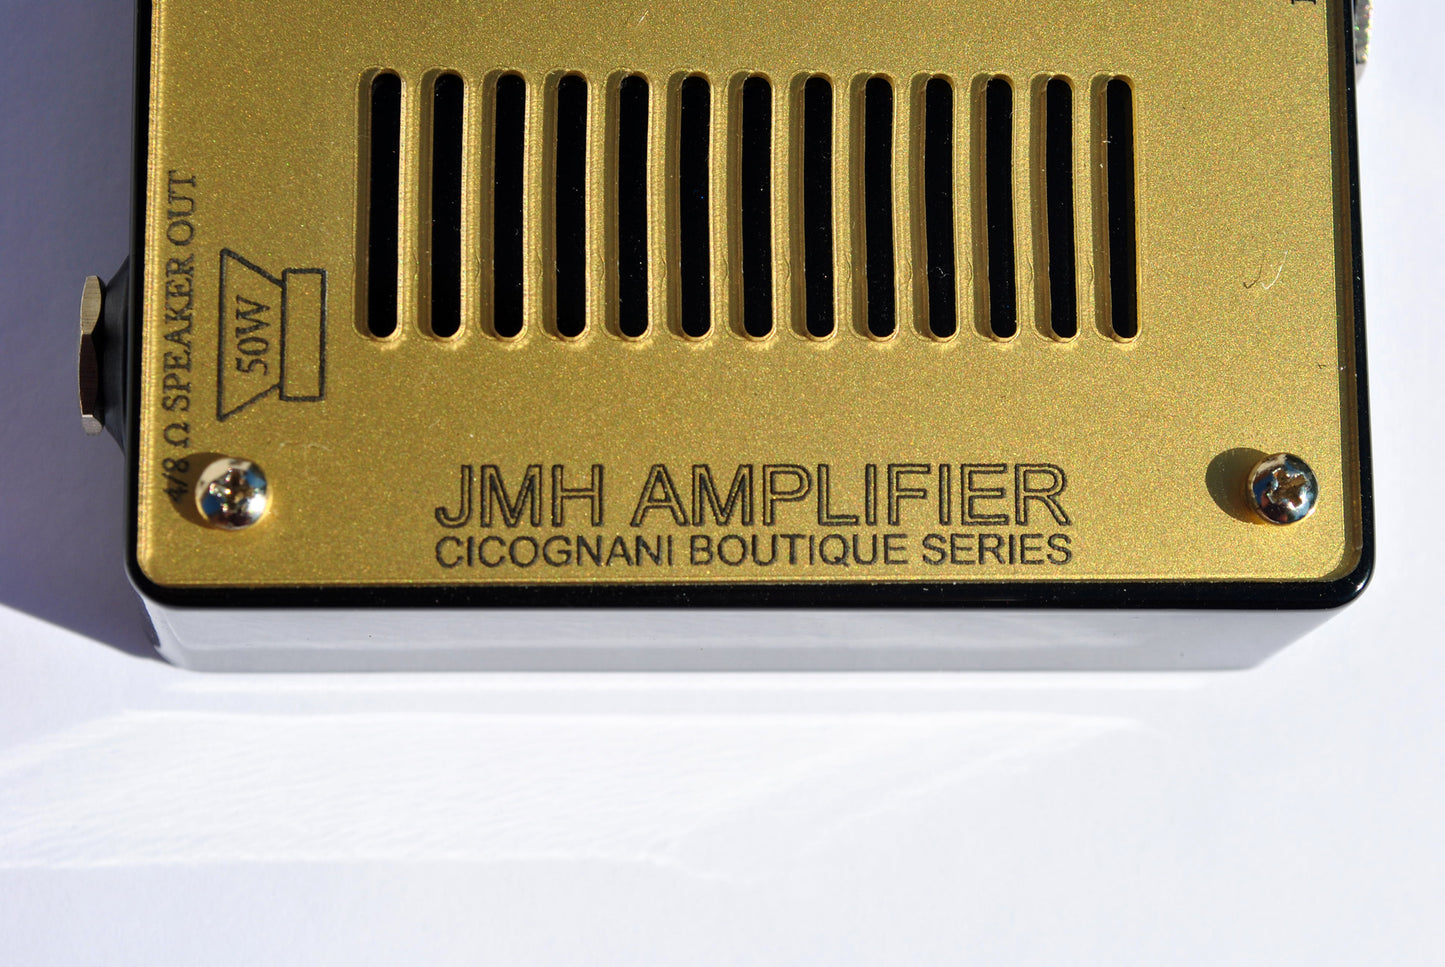 JMH AMPLIFIER